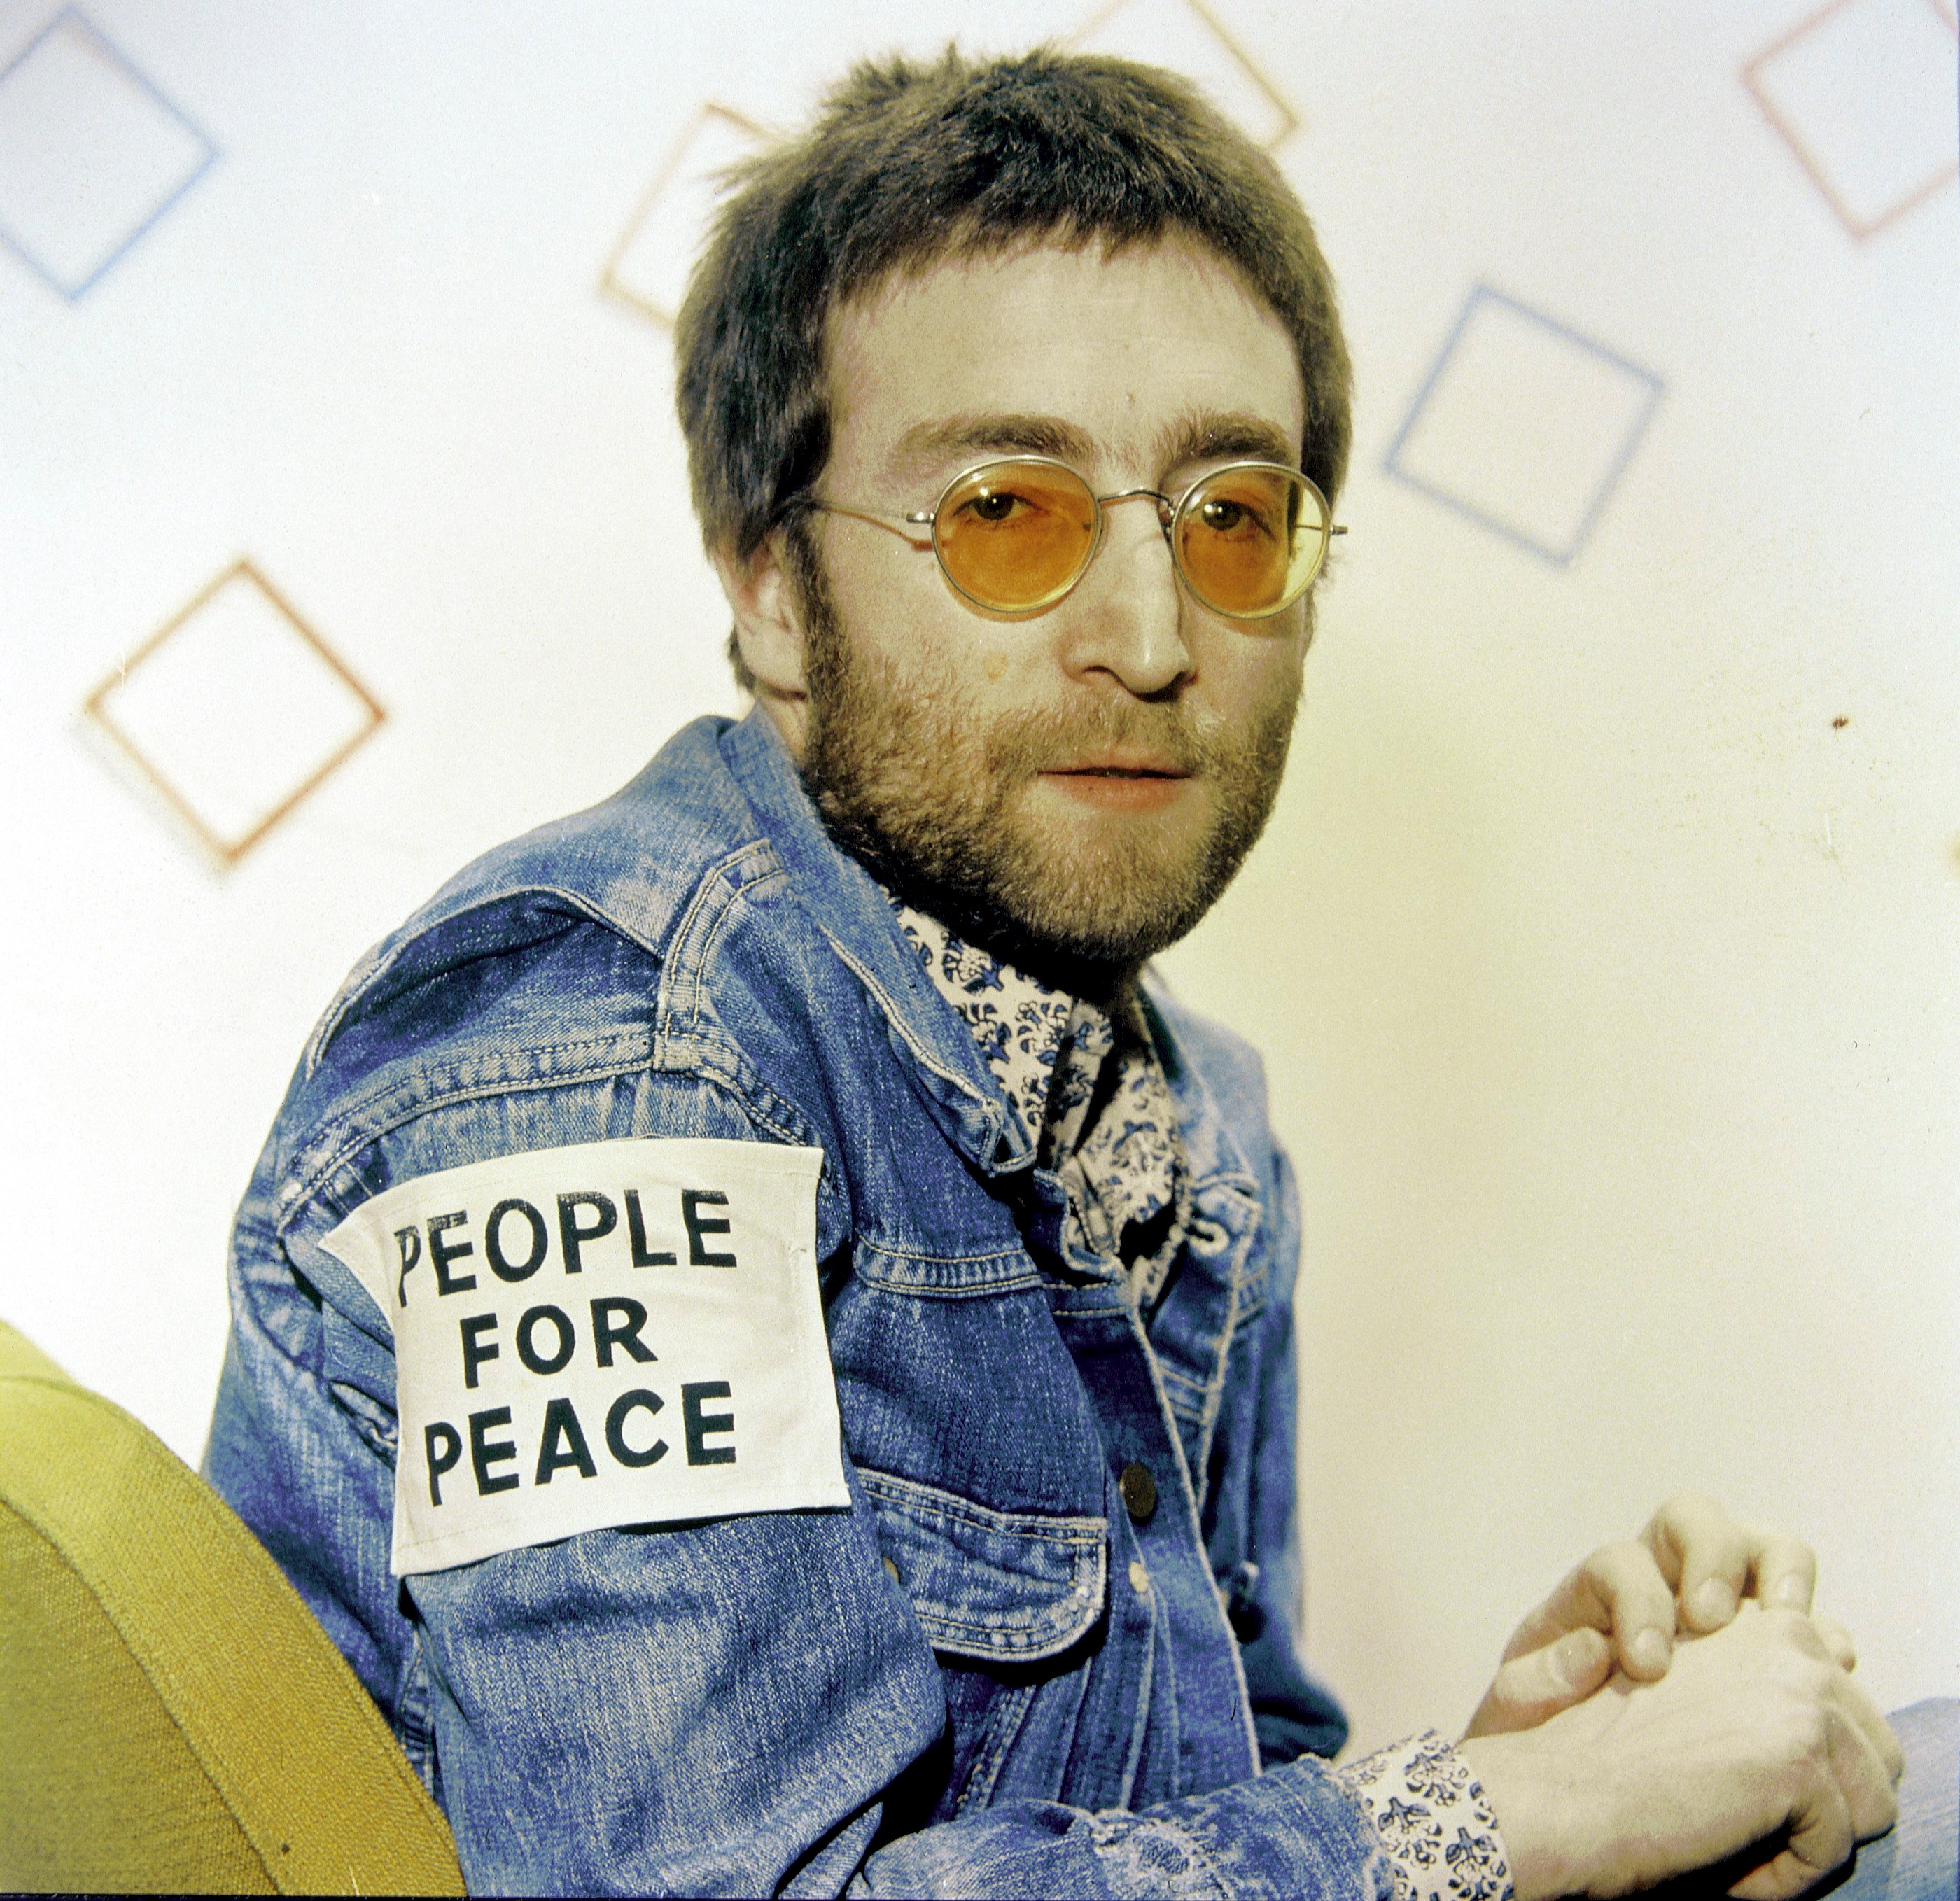 John Lennon wearing blue during the "Imagine" era